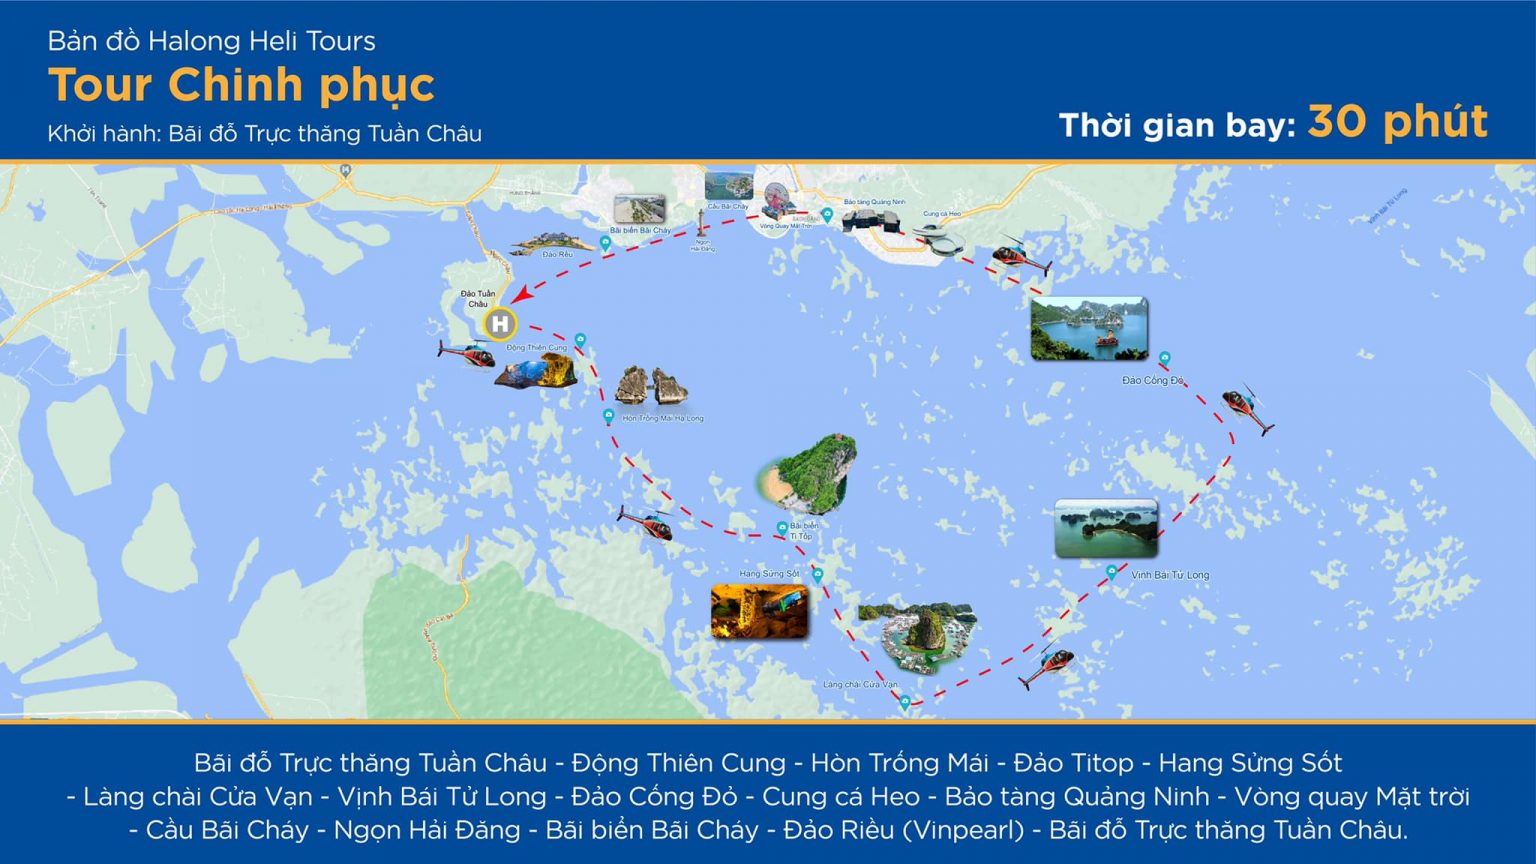 Tour Chinh phuc 30 phut 1536x864 1